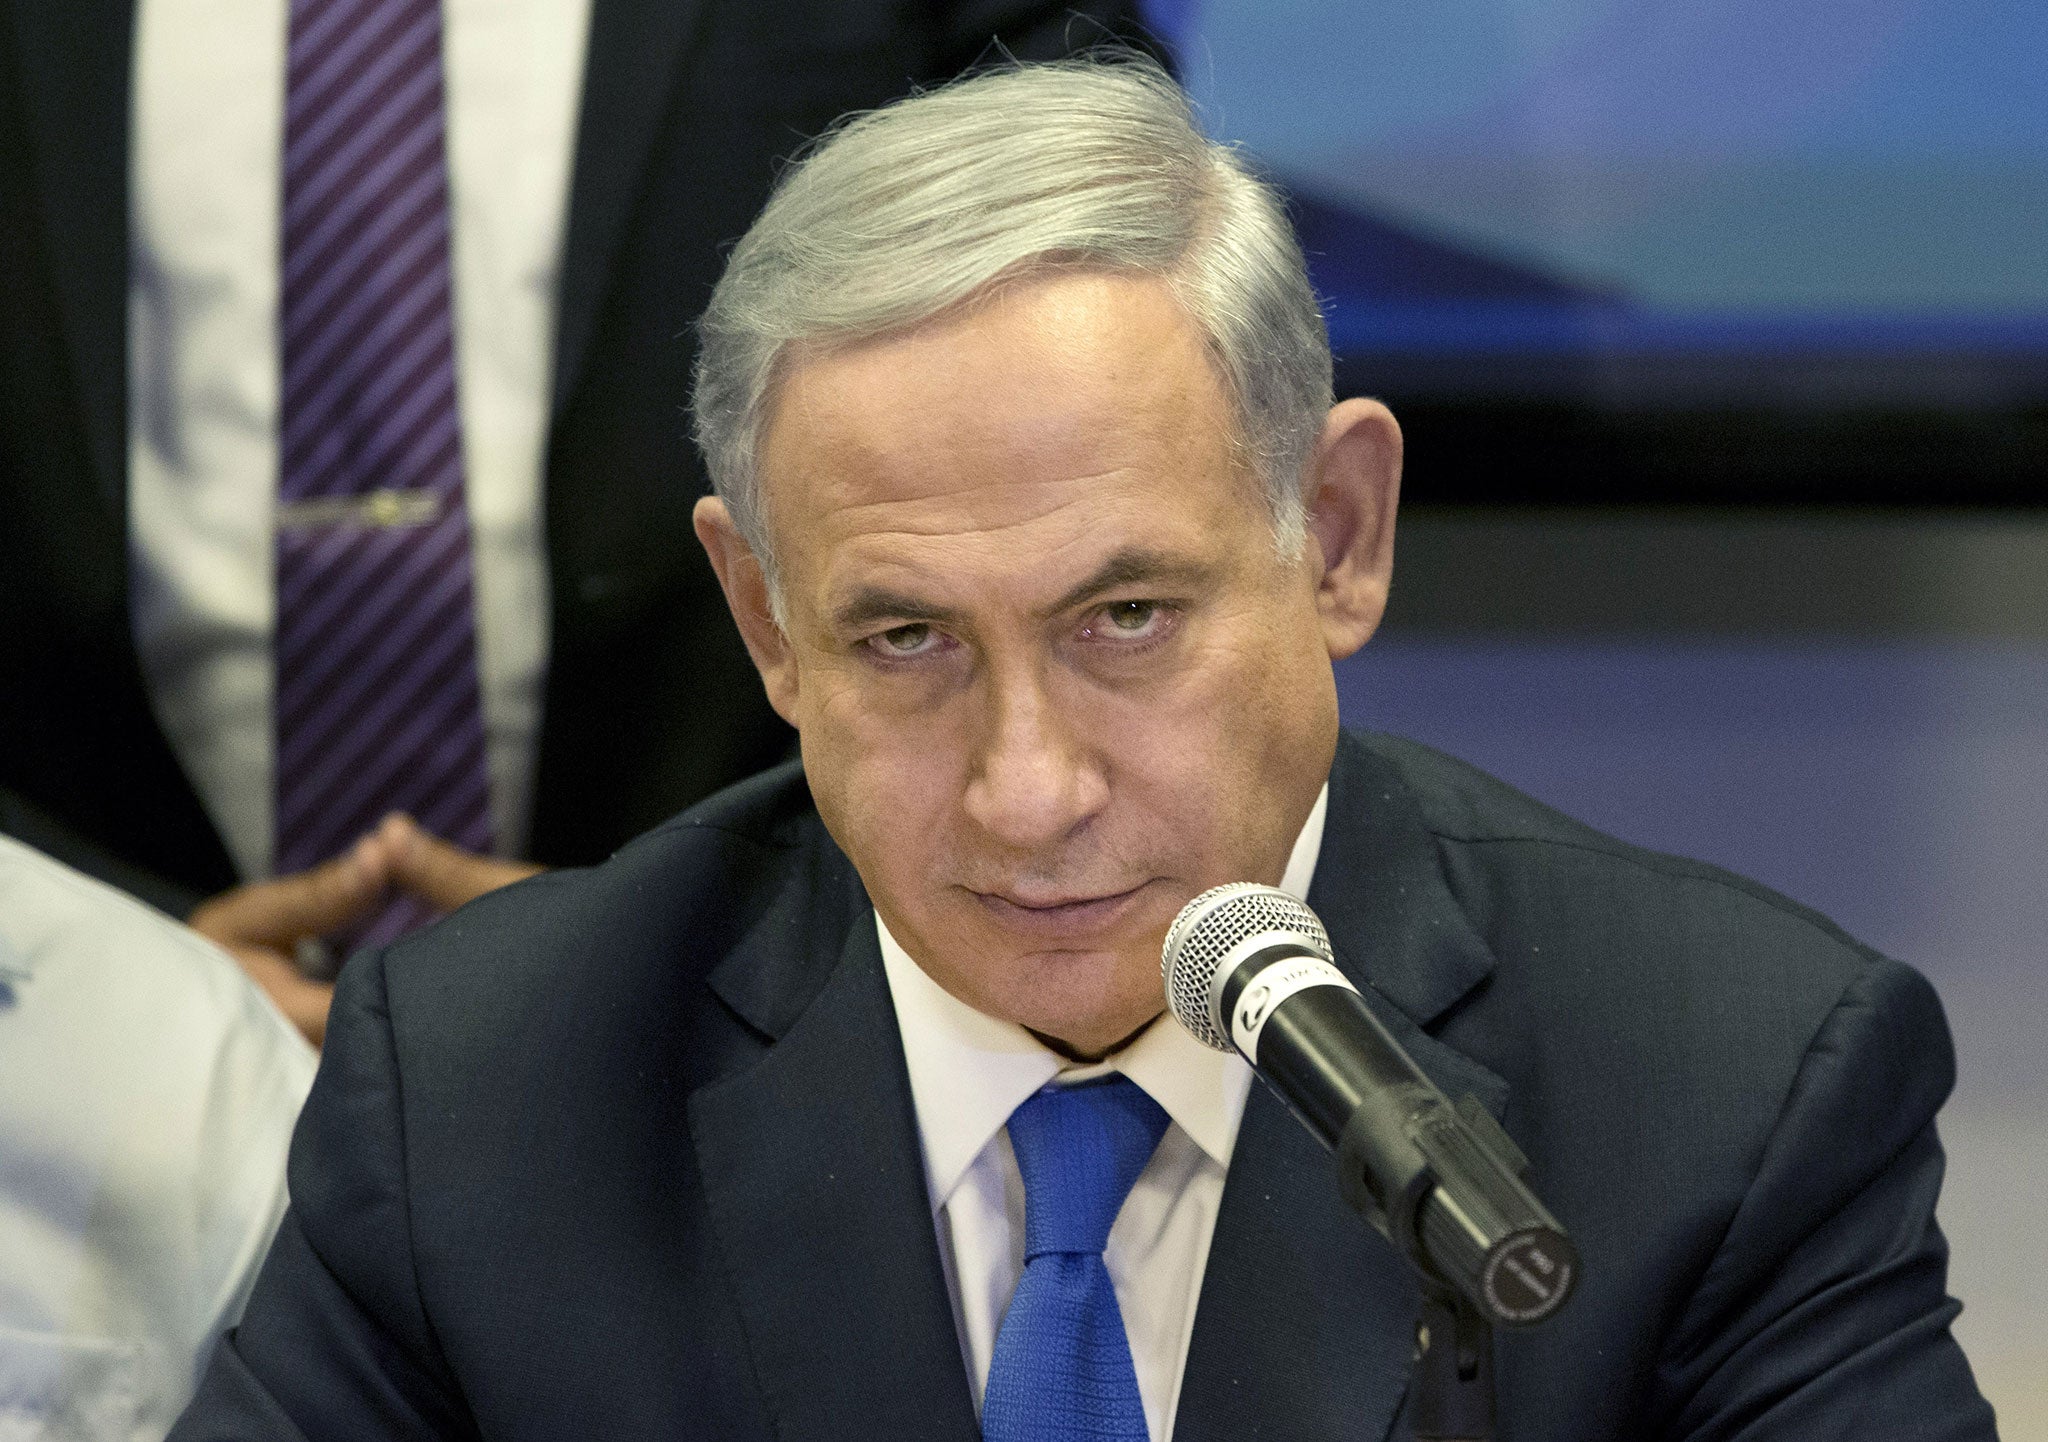 Israeli Prime Minister Benjamin Netanyahu attends a Likud party meeting in Or Yehuda near Tel Aviv, Israel, Monday, March 16, 2015